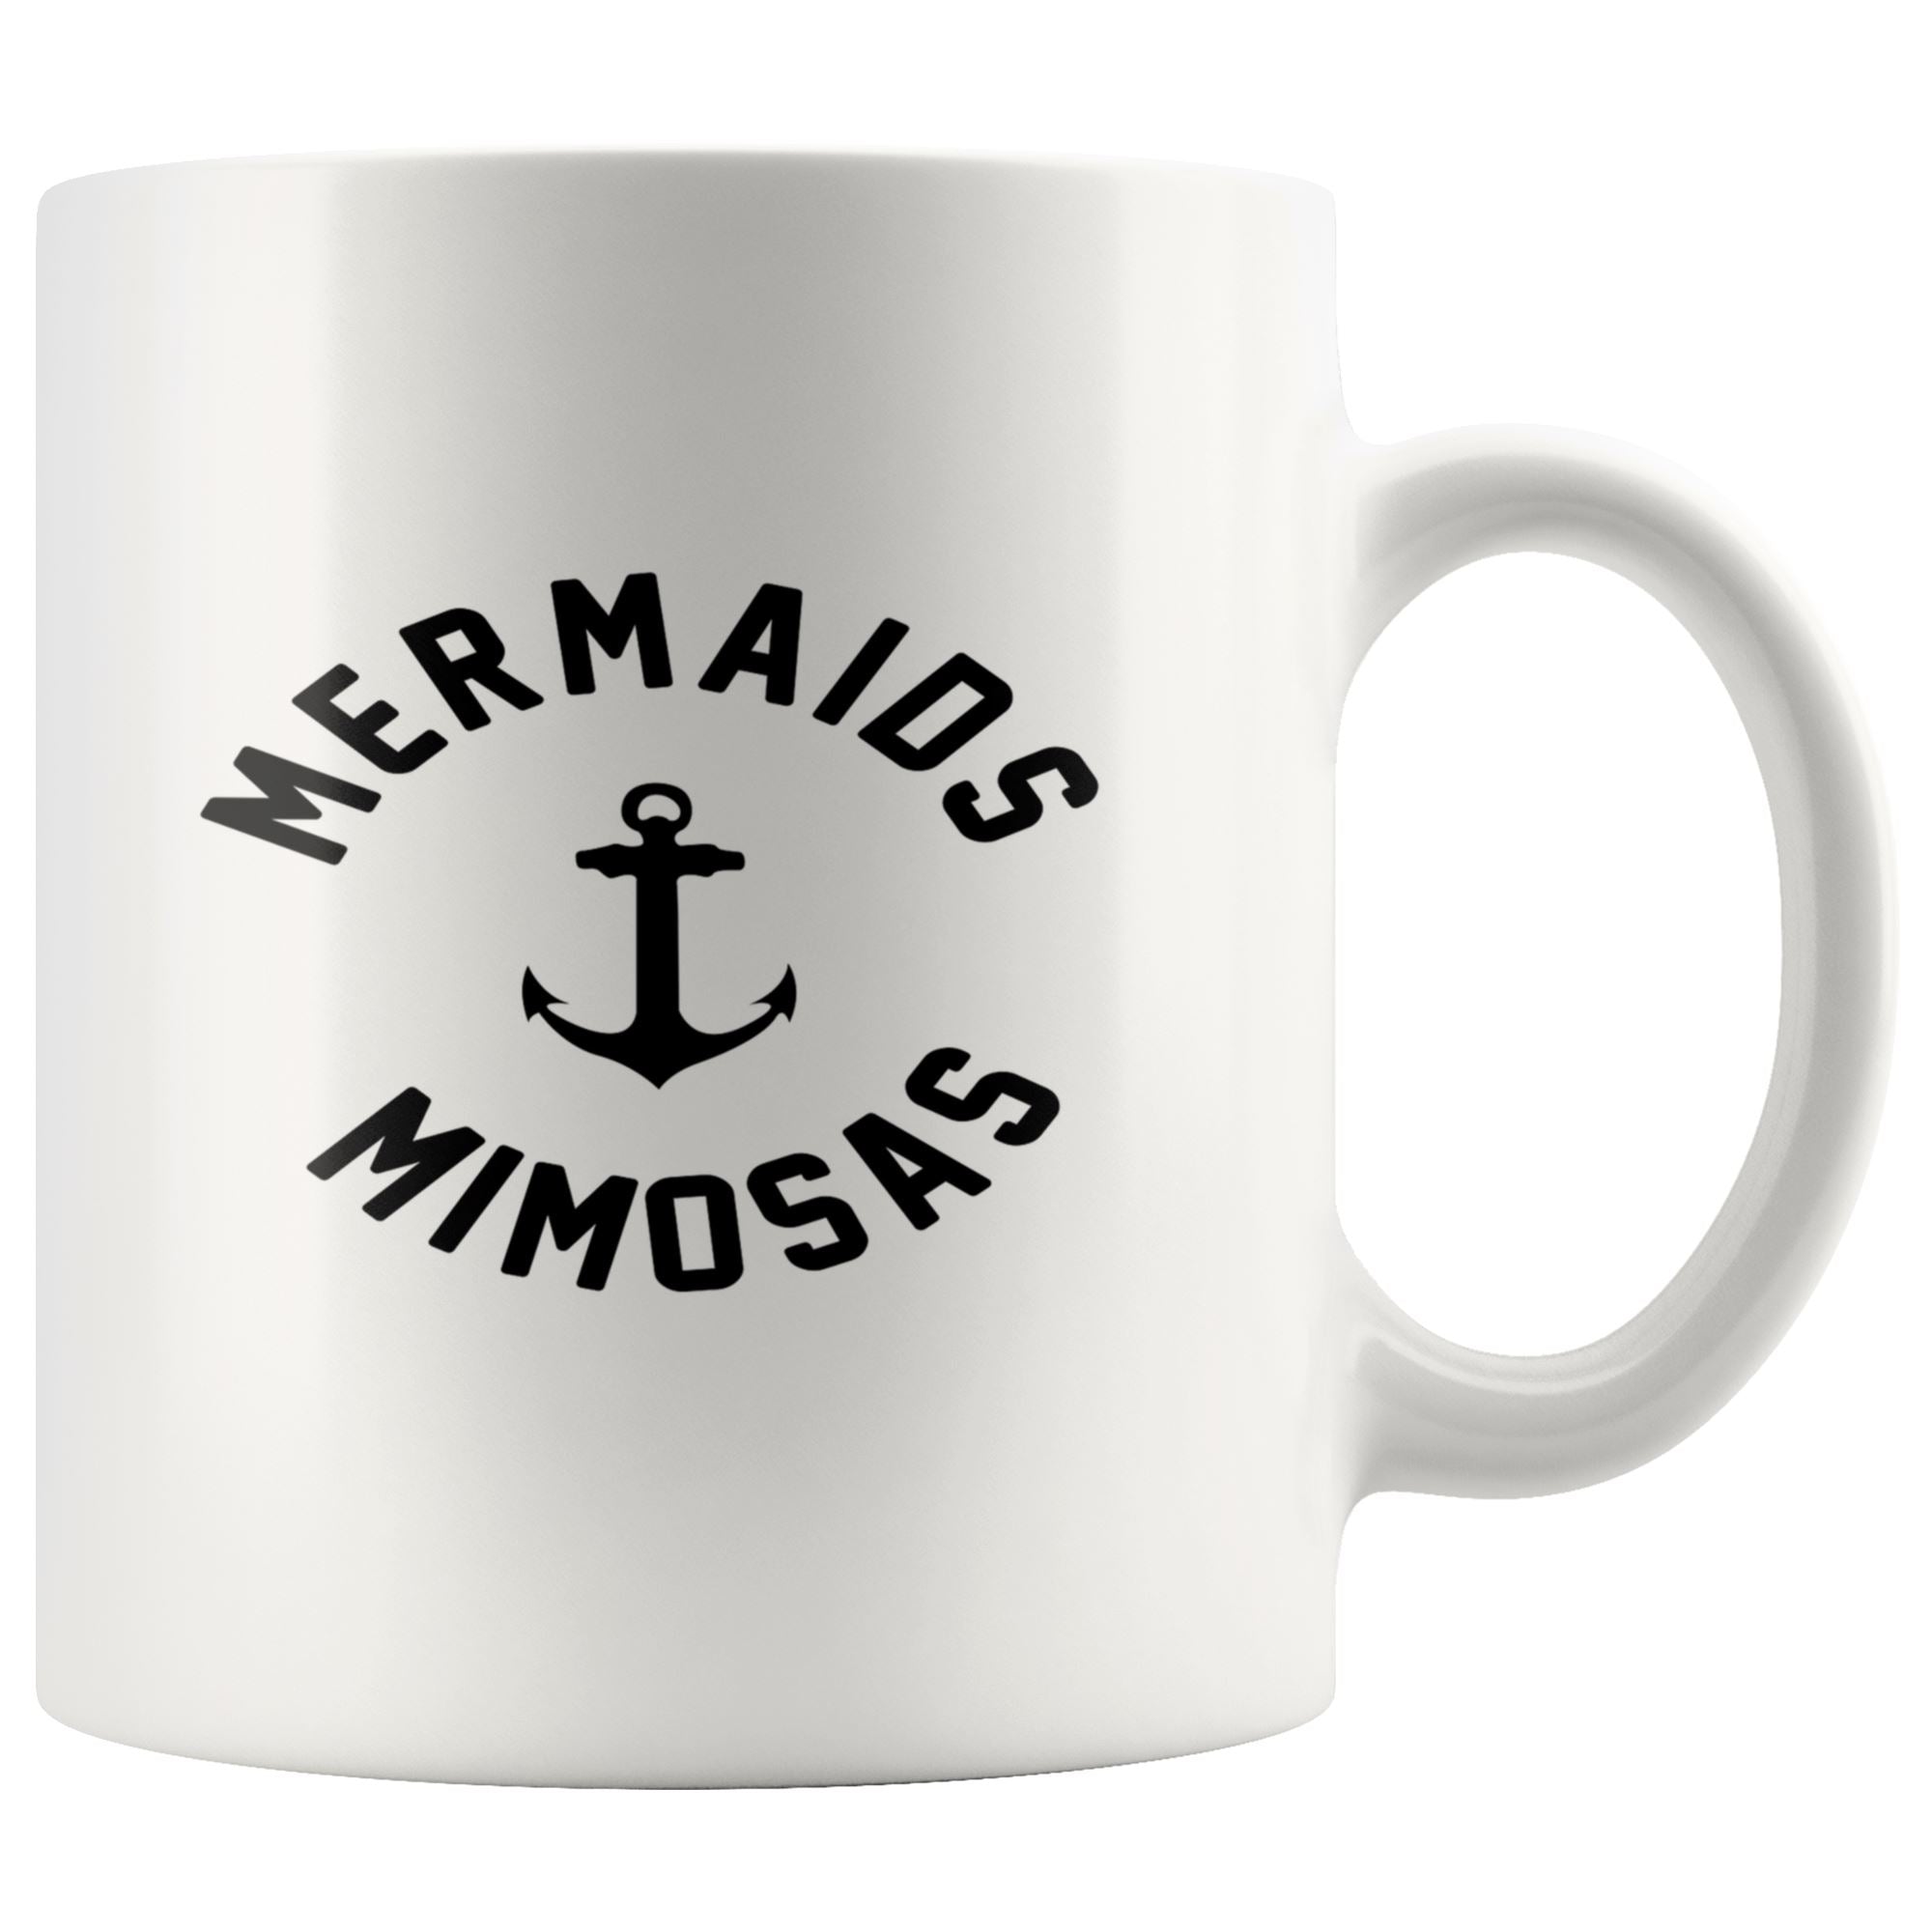 Mermaids Mimosa Drinkware teelaunch 11oz Mug 